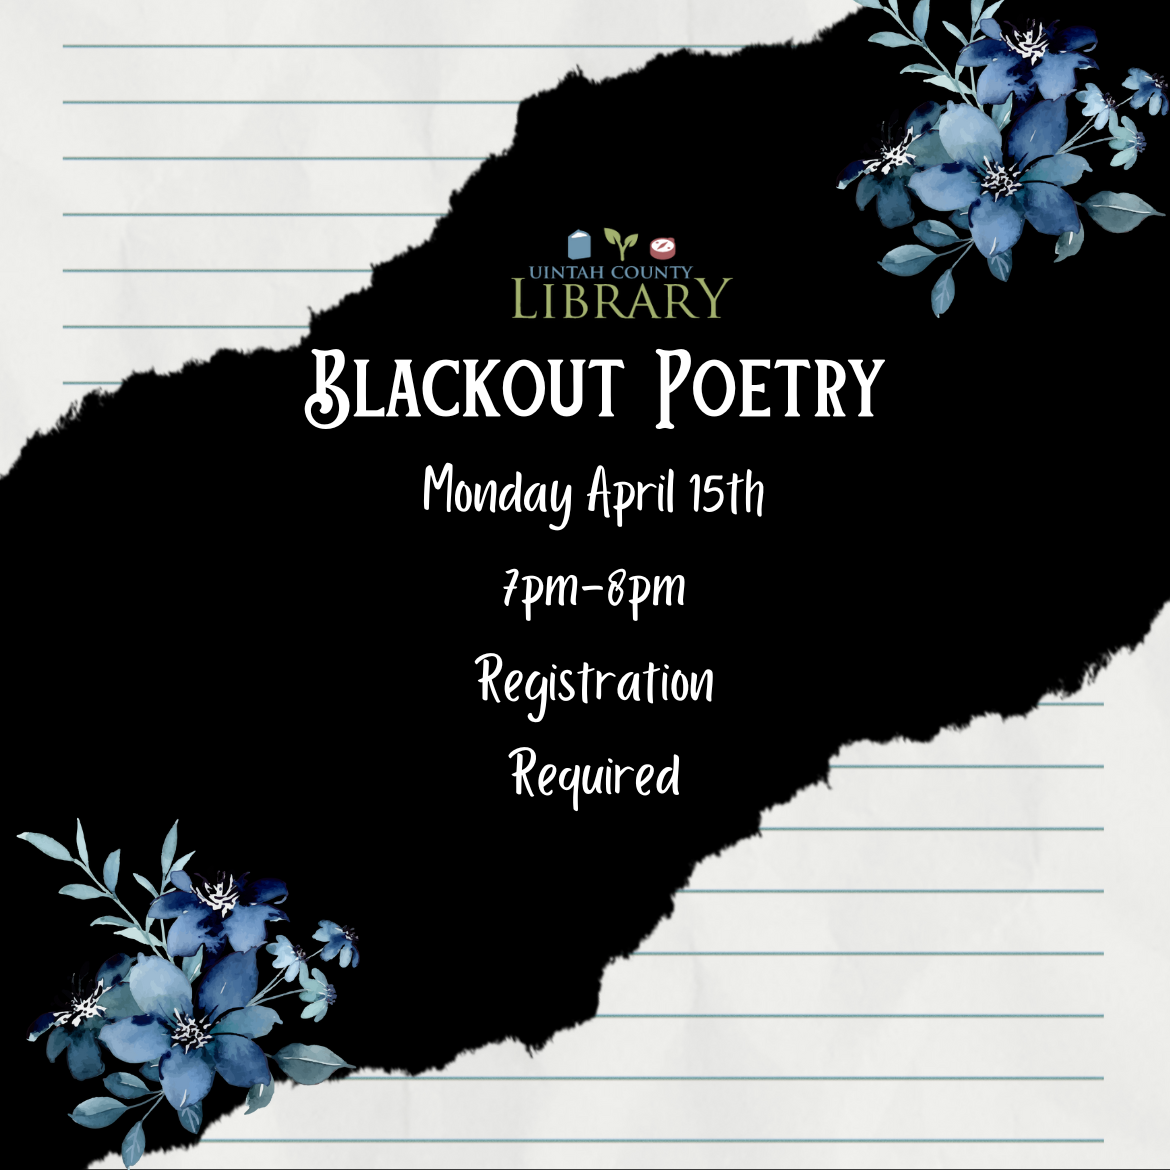 Blackout Poetry. Monday April 15th 7 pm - 8 pm